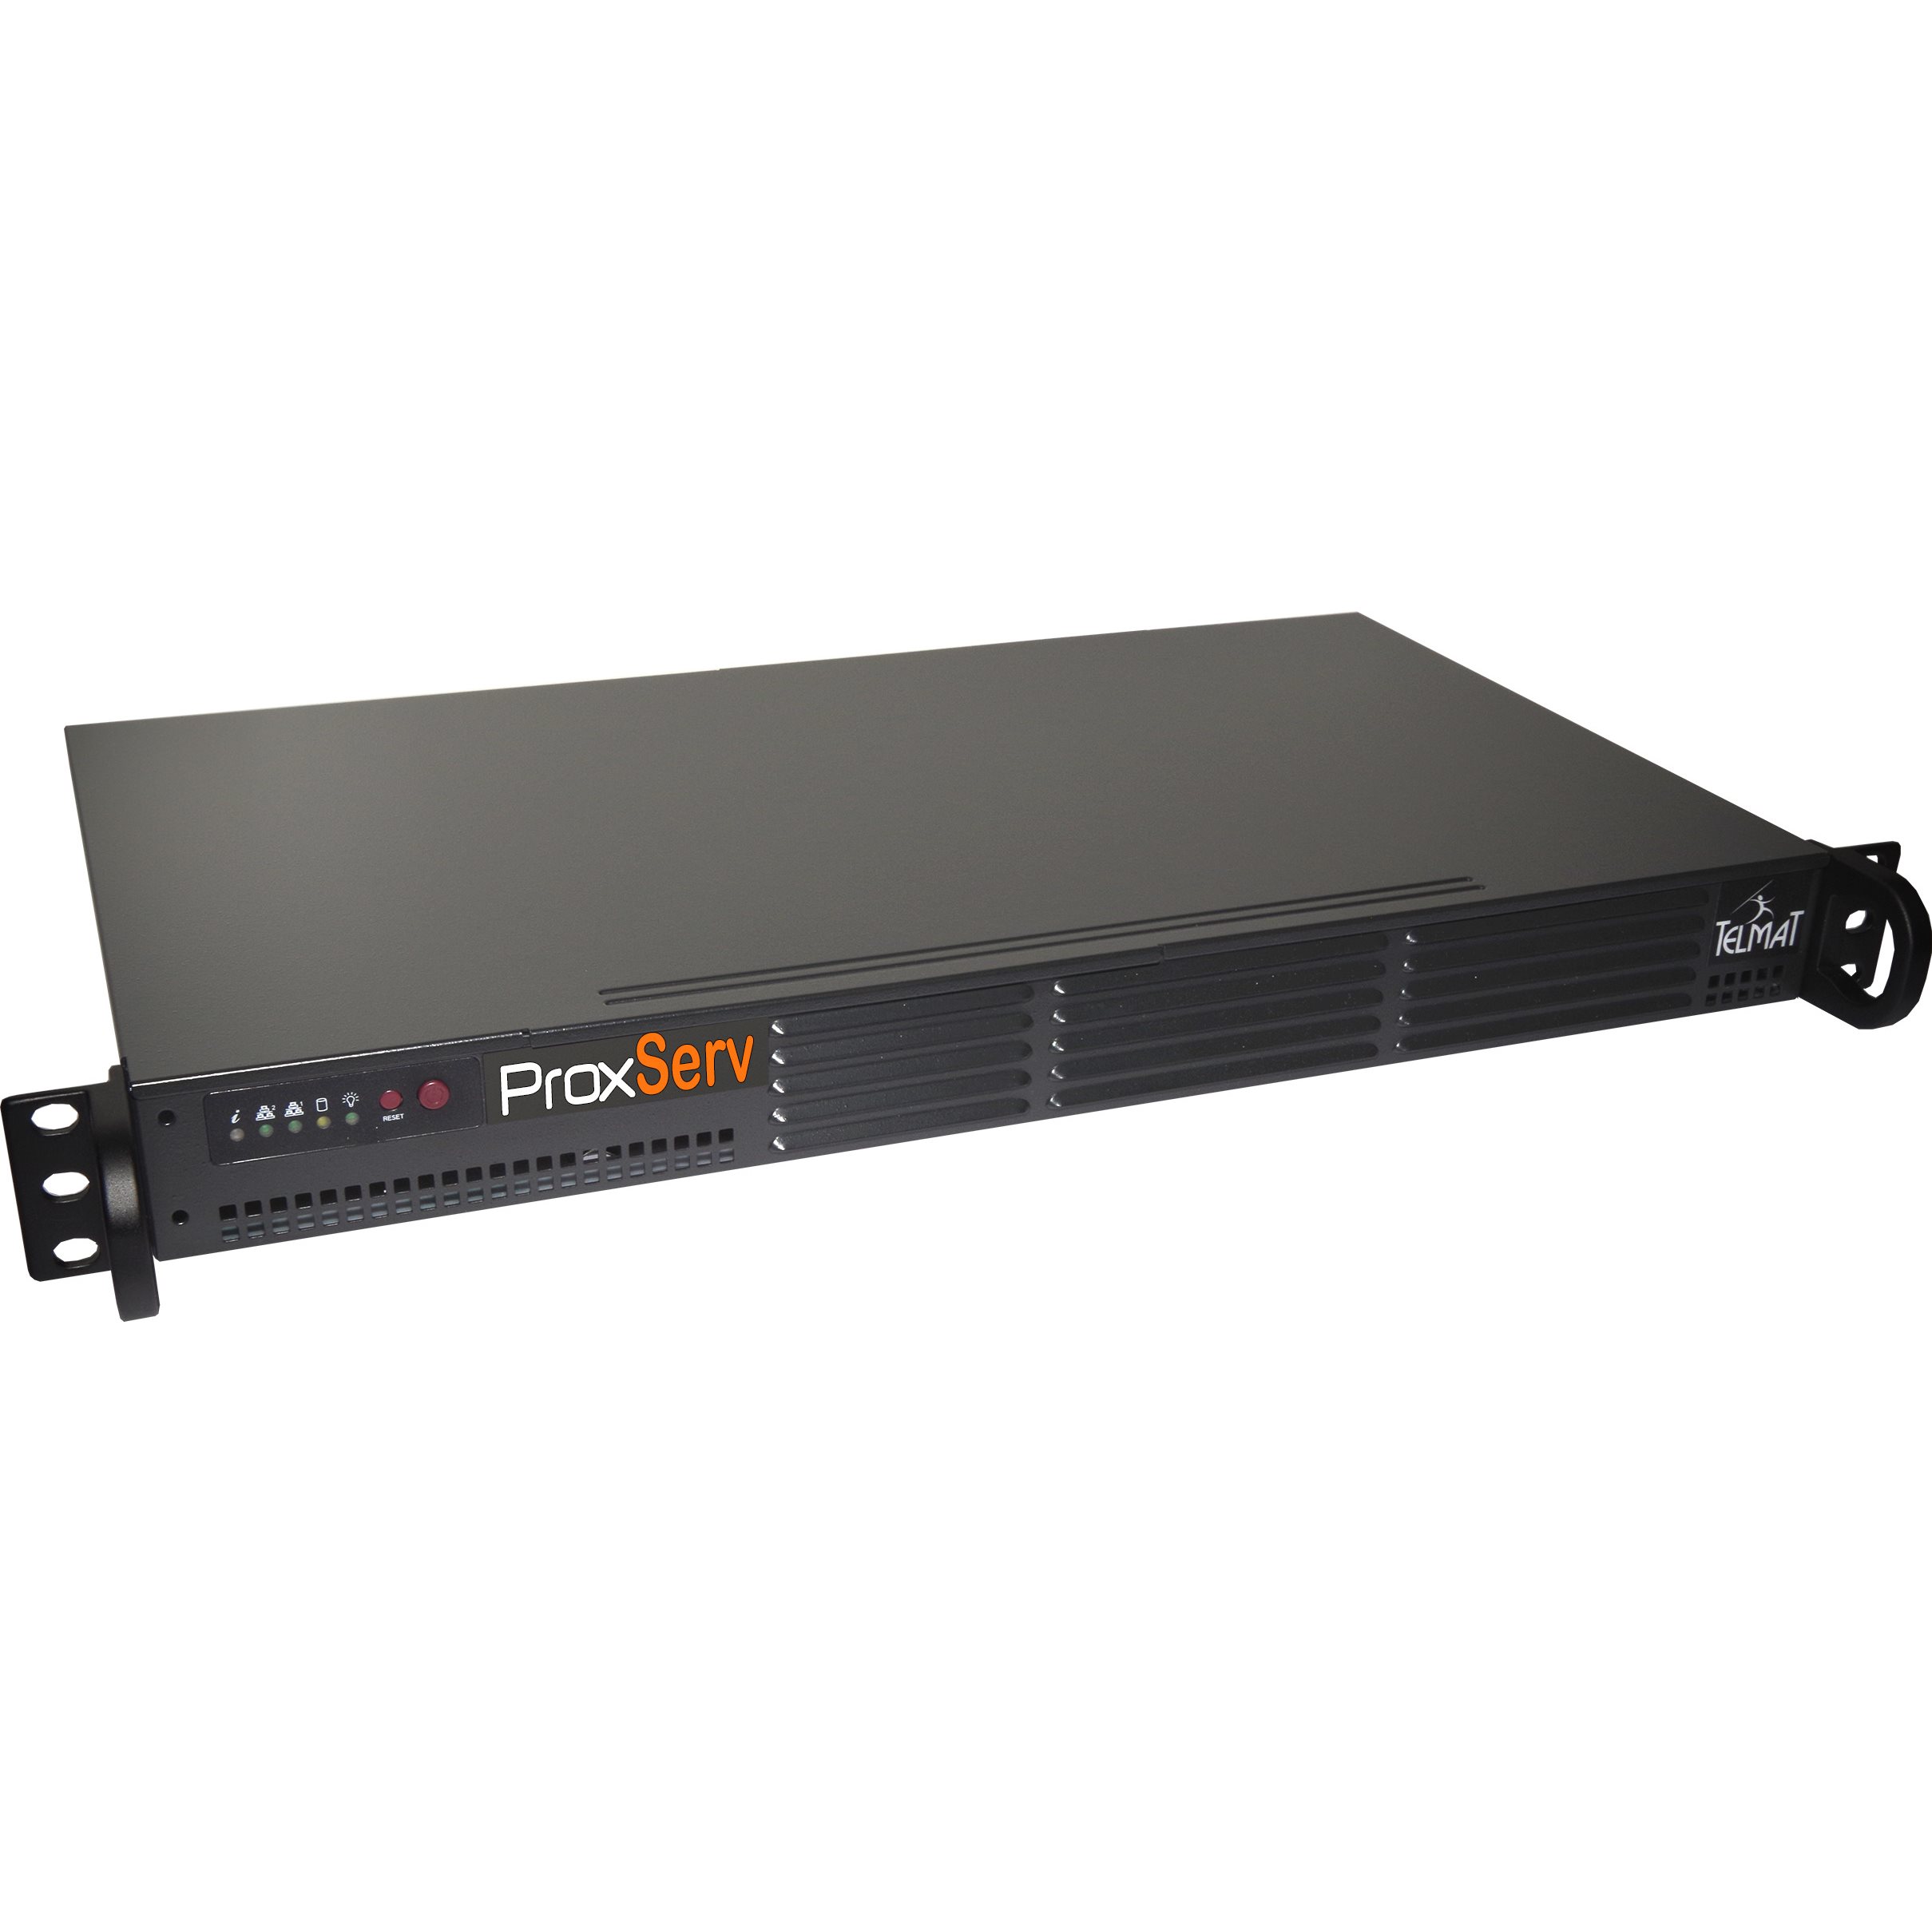   Contrôleurs Hot Spot   ProxServ 1000 médias, rack 1U 3 Ethernet Giga PSV1000RCK